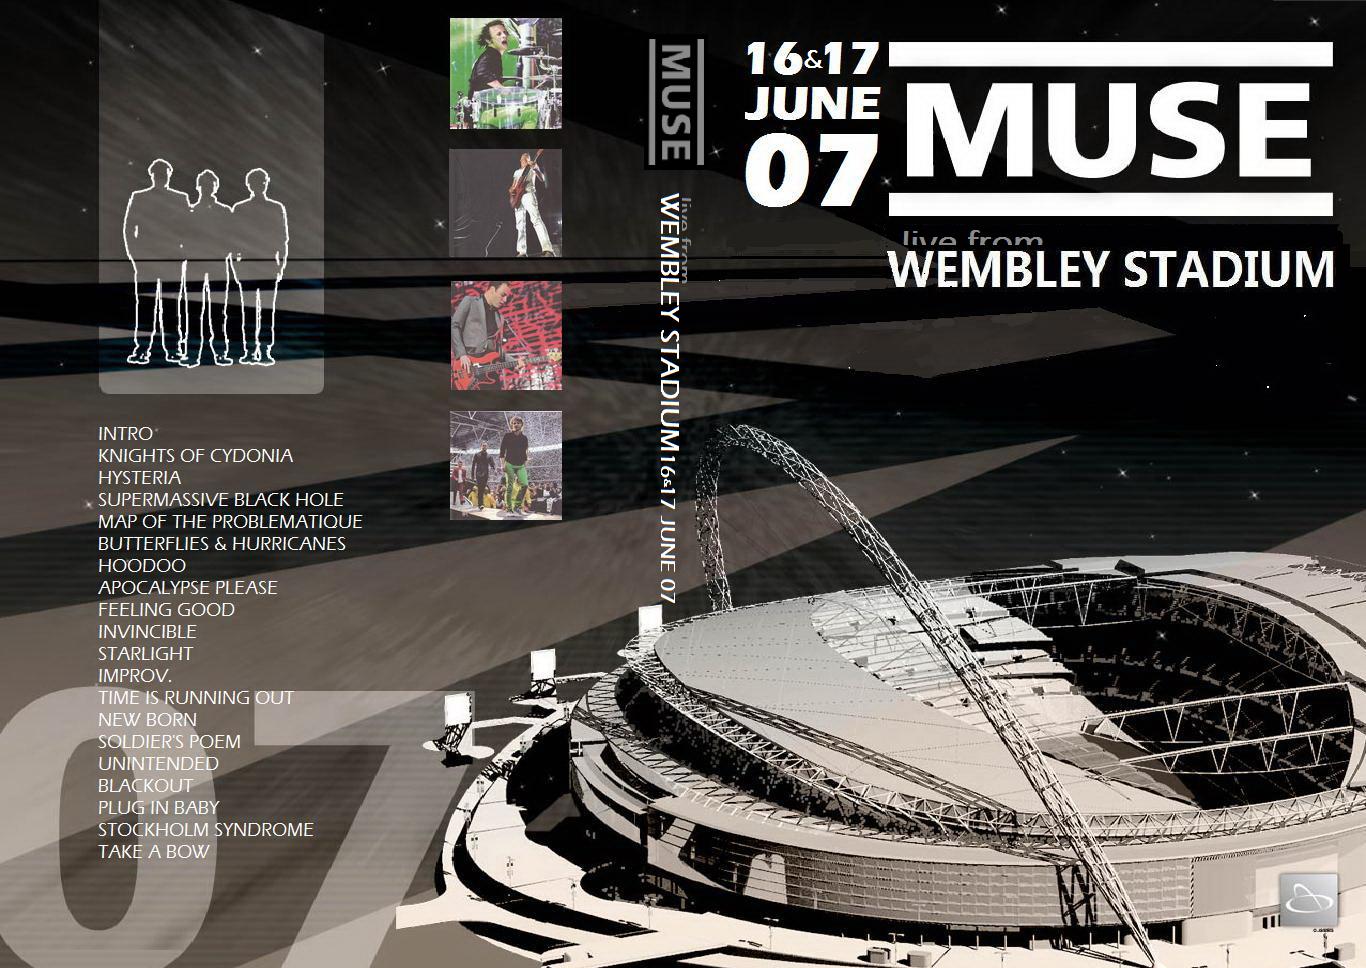 Jaquette DVD Muse Wembley Stadium custom